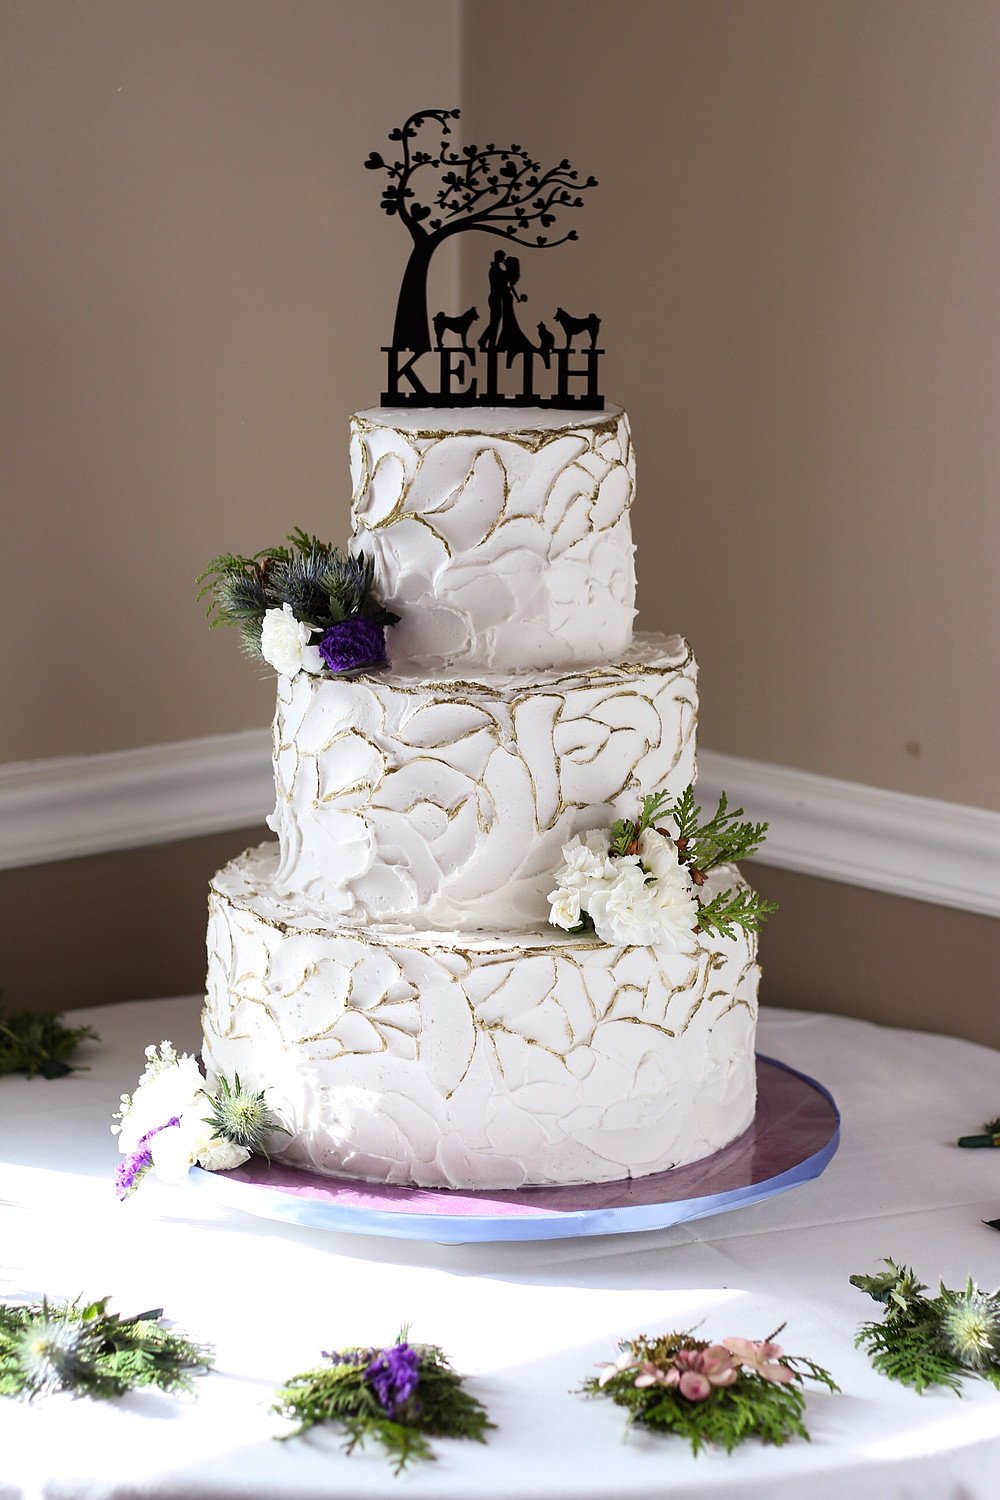 How Much Wedding Cake Do I Need?